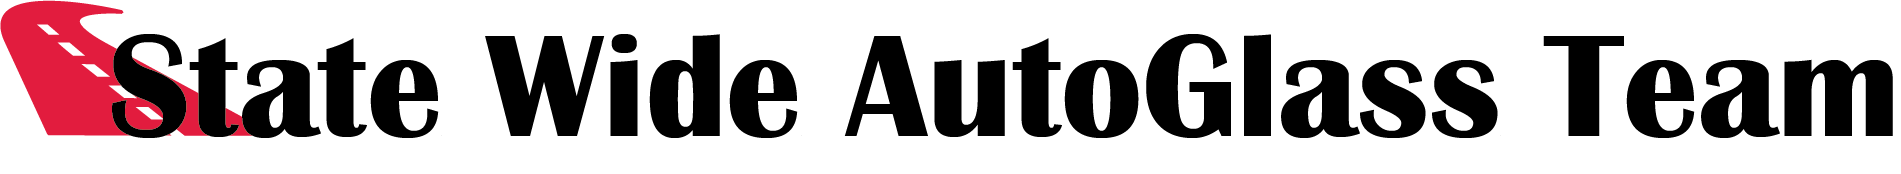 State-Wide-Autoglass-Team-logo